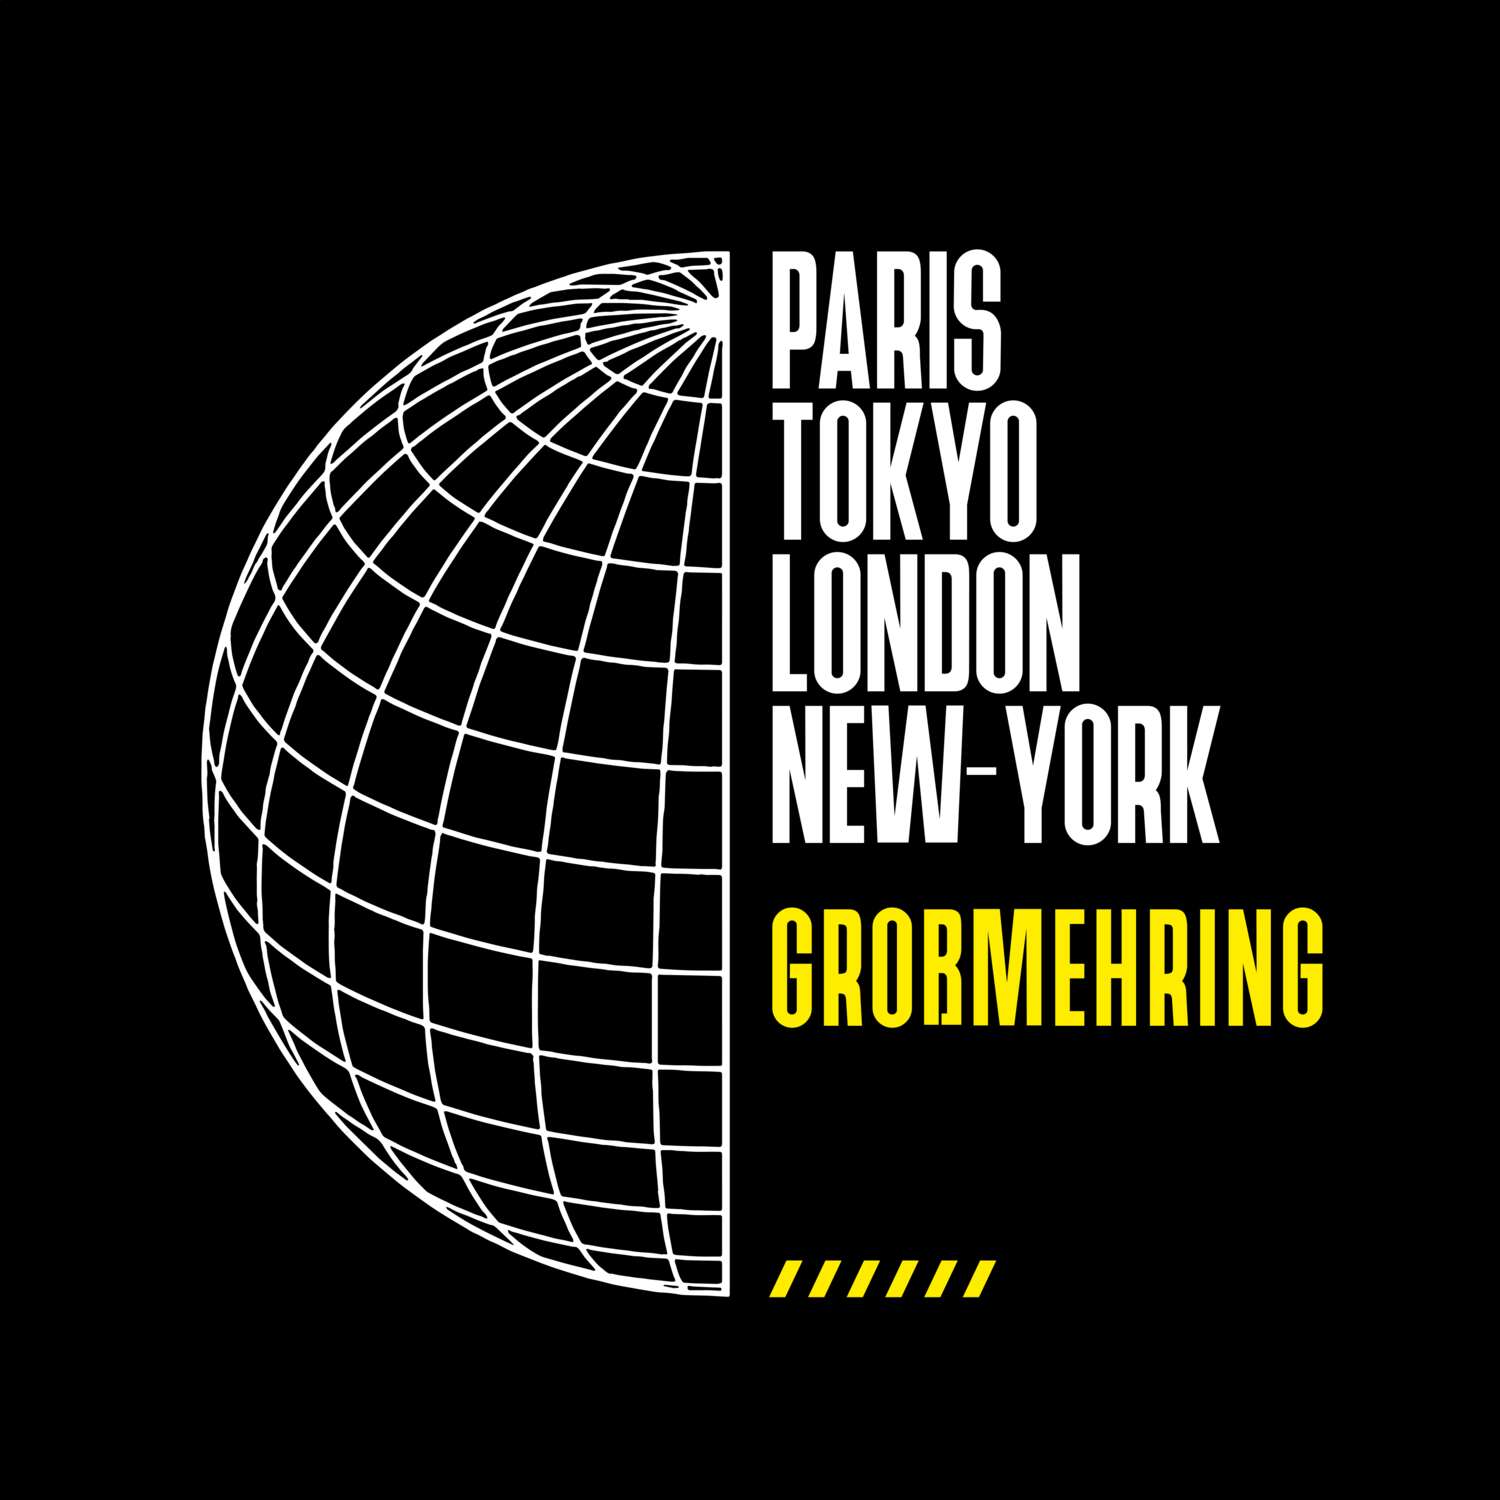 Großmehring T-Shirt »Paris Tokyo London«